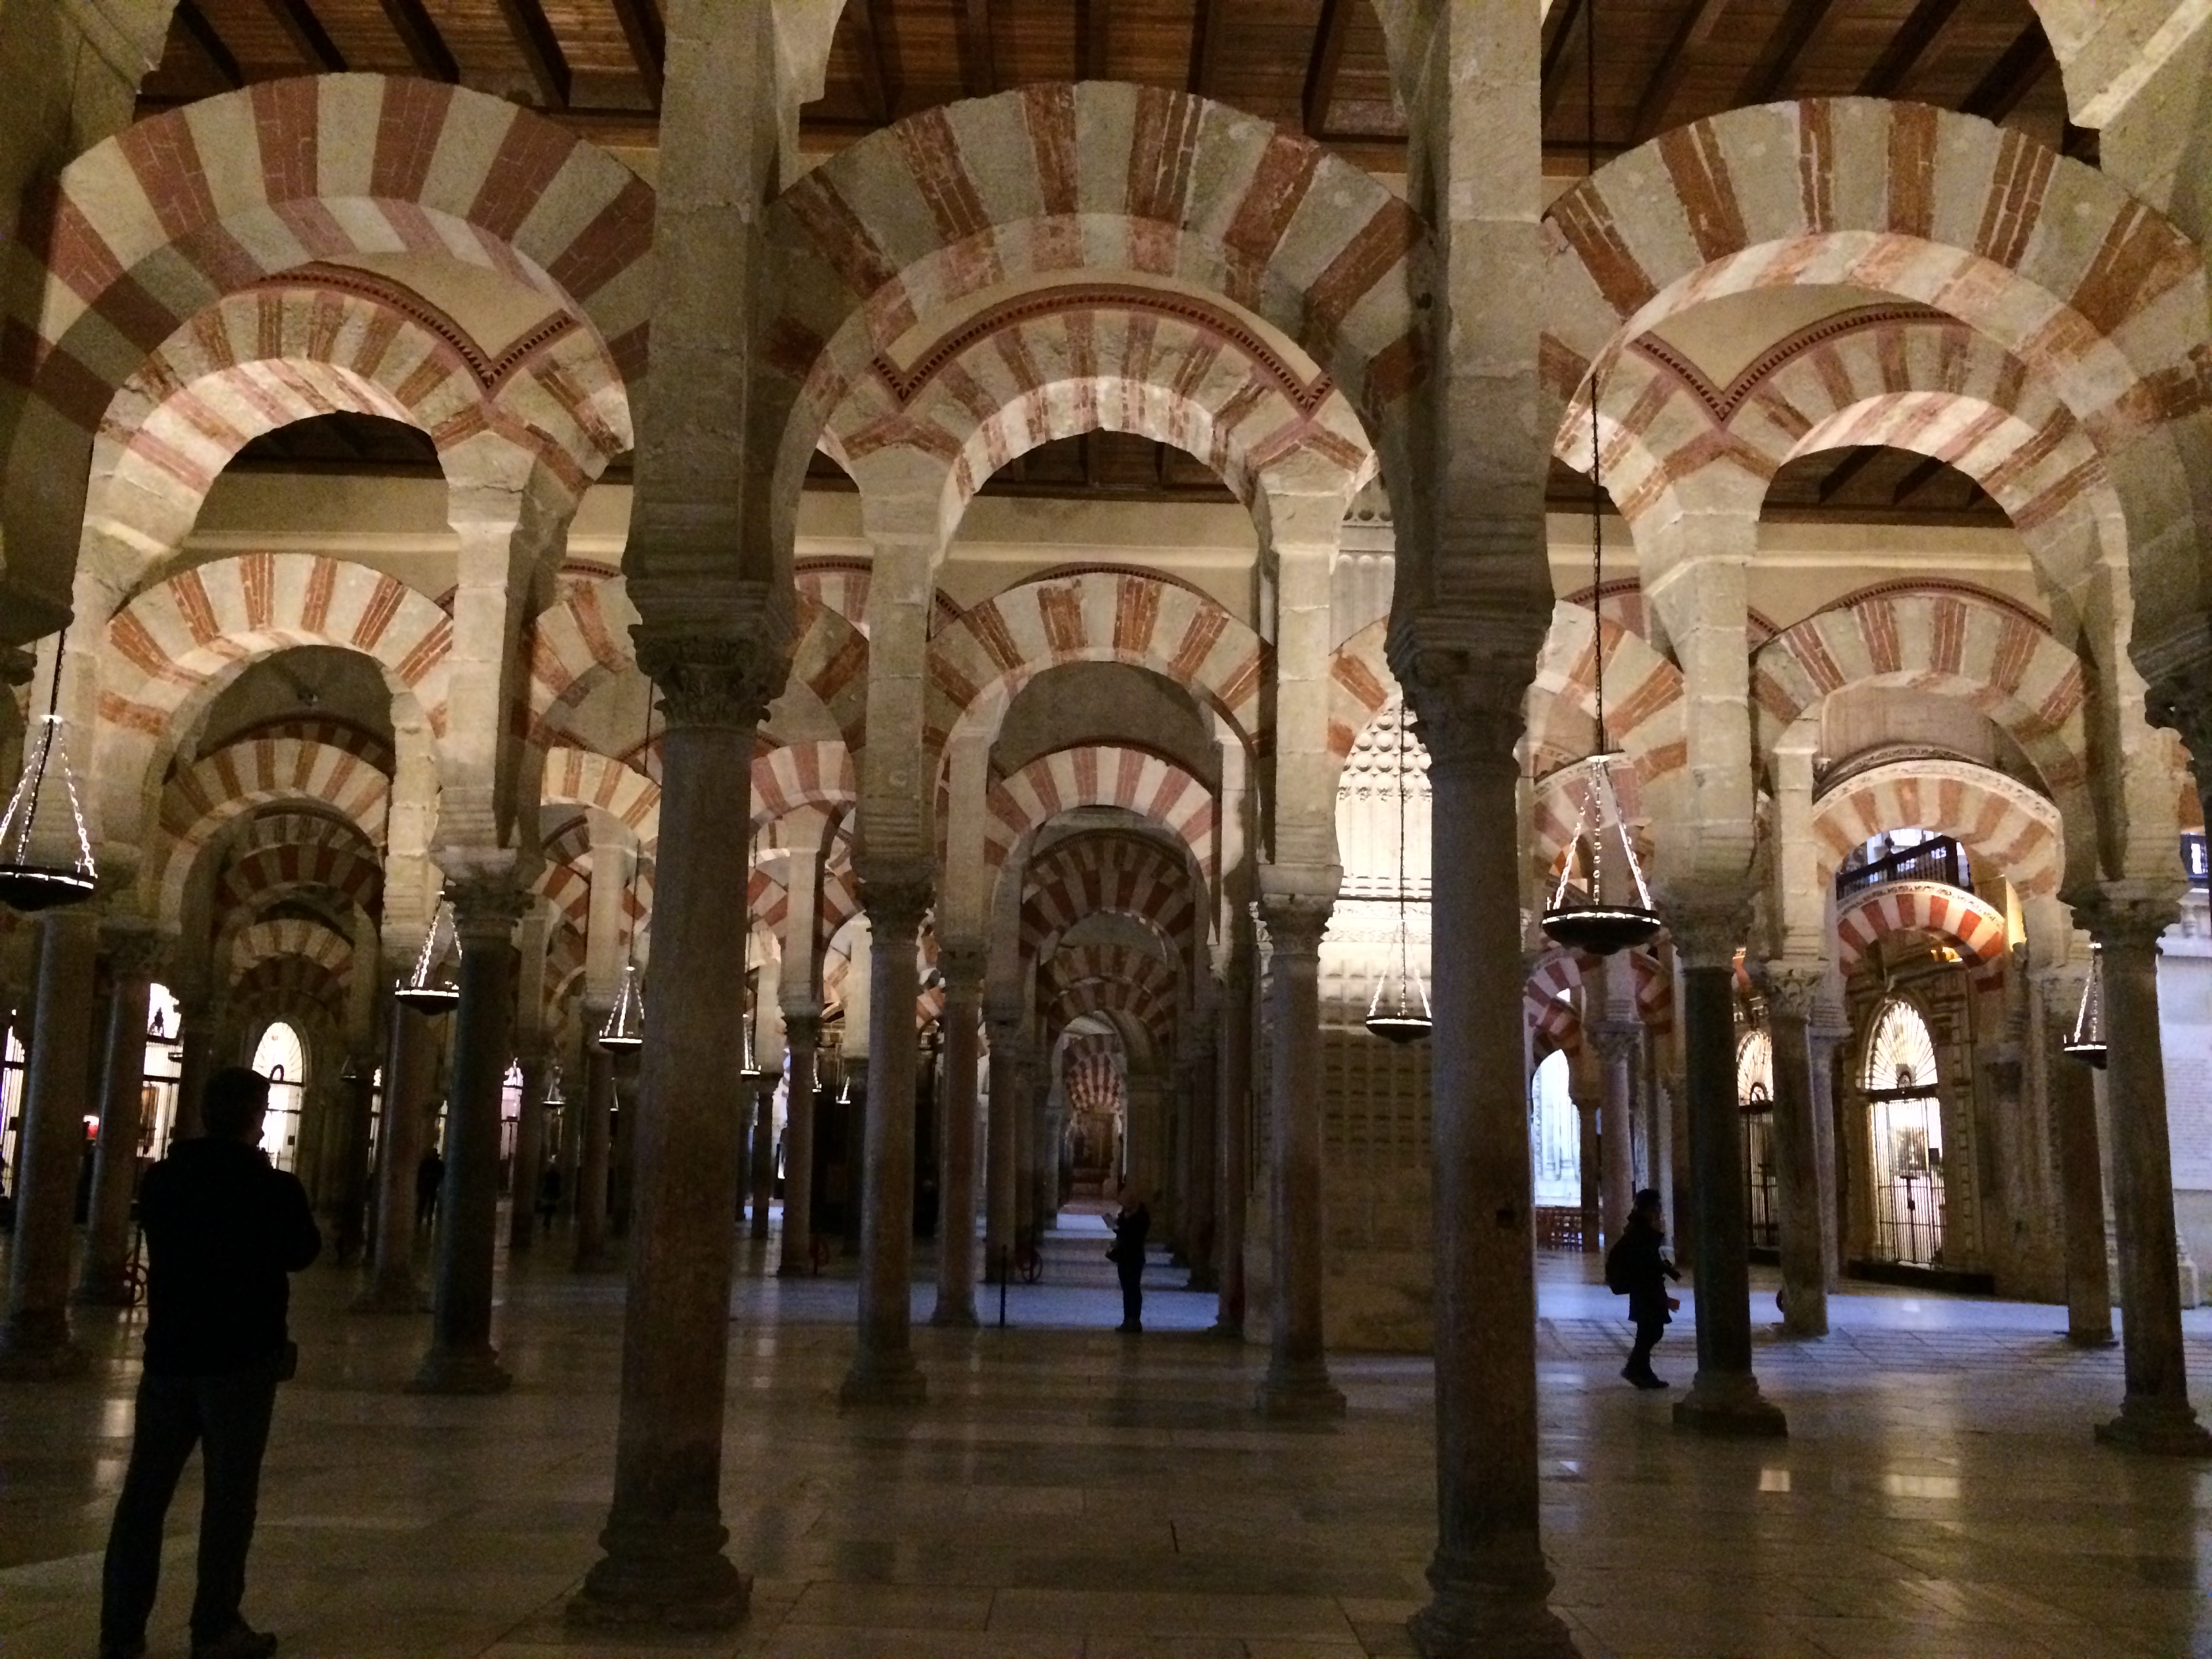 Córdoba Mosque-Church mesmerising arches